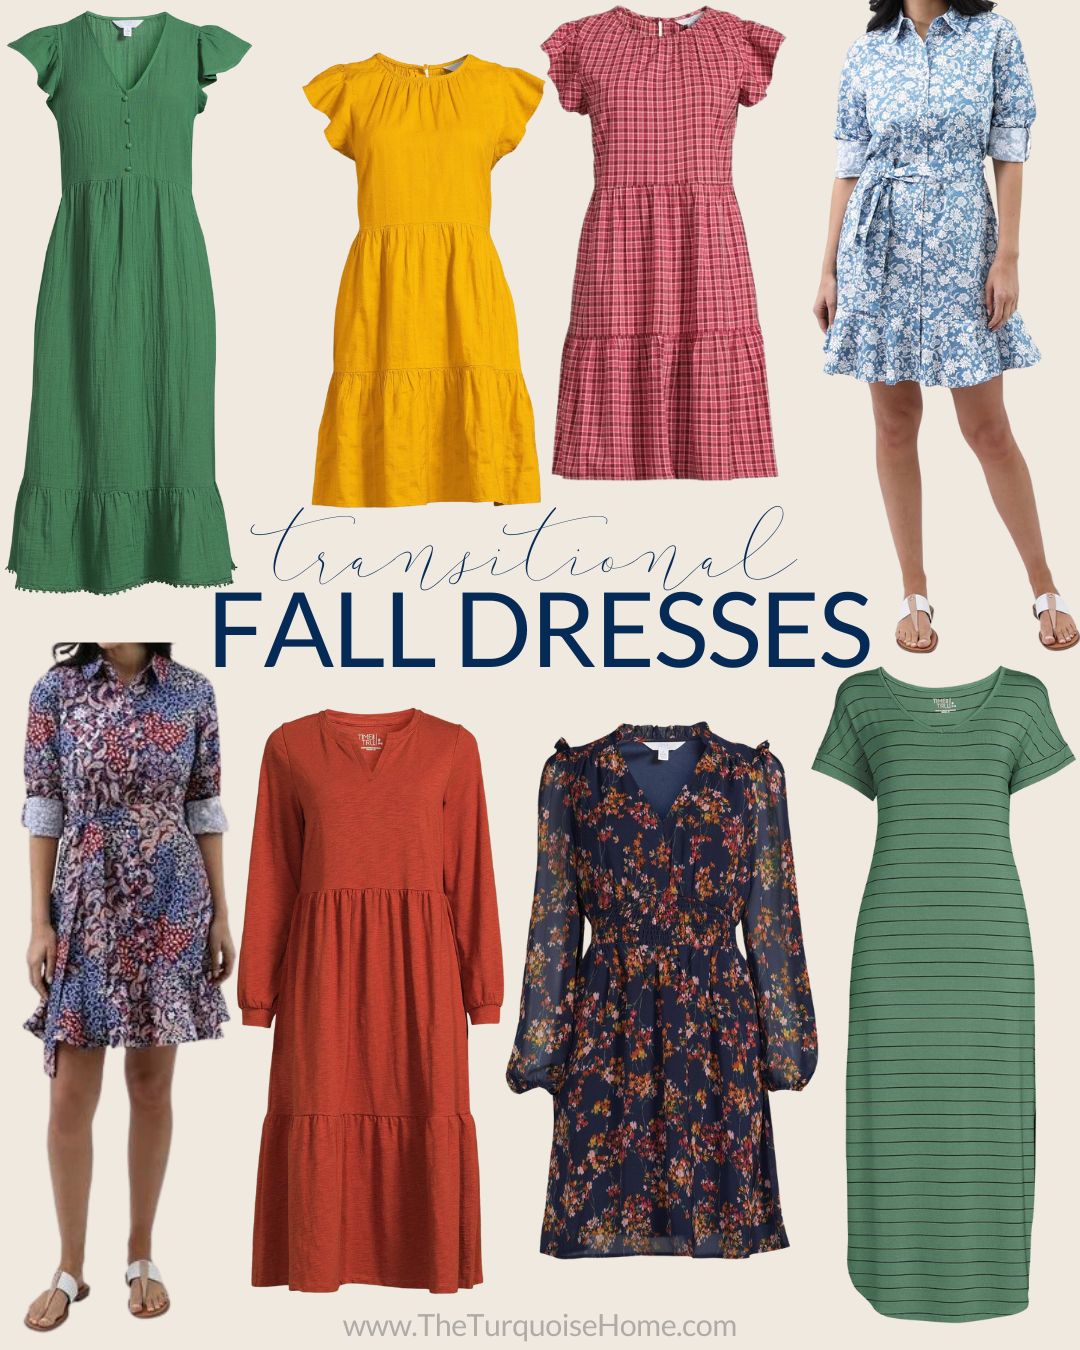 Transitional Fall Dresses on Walmart